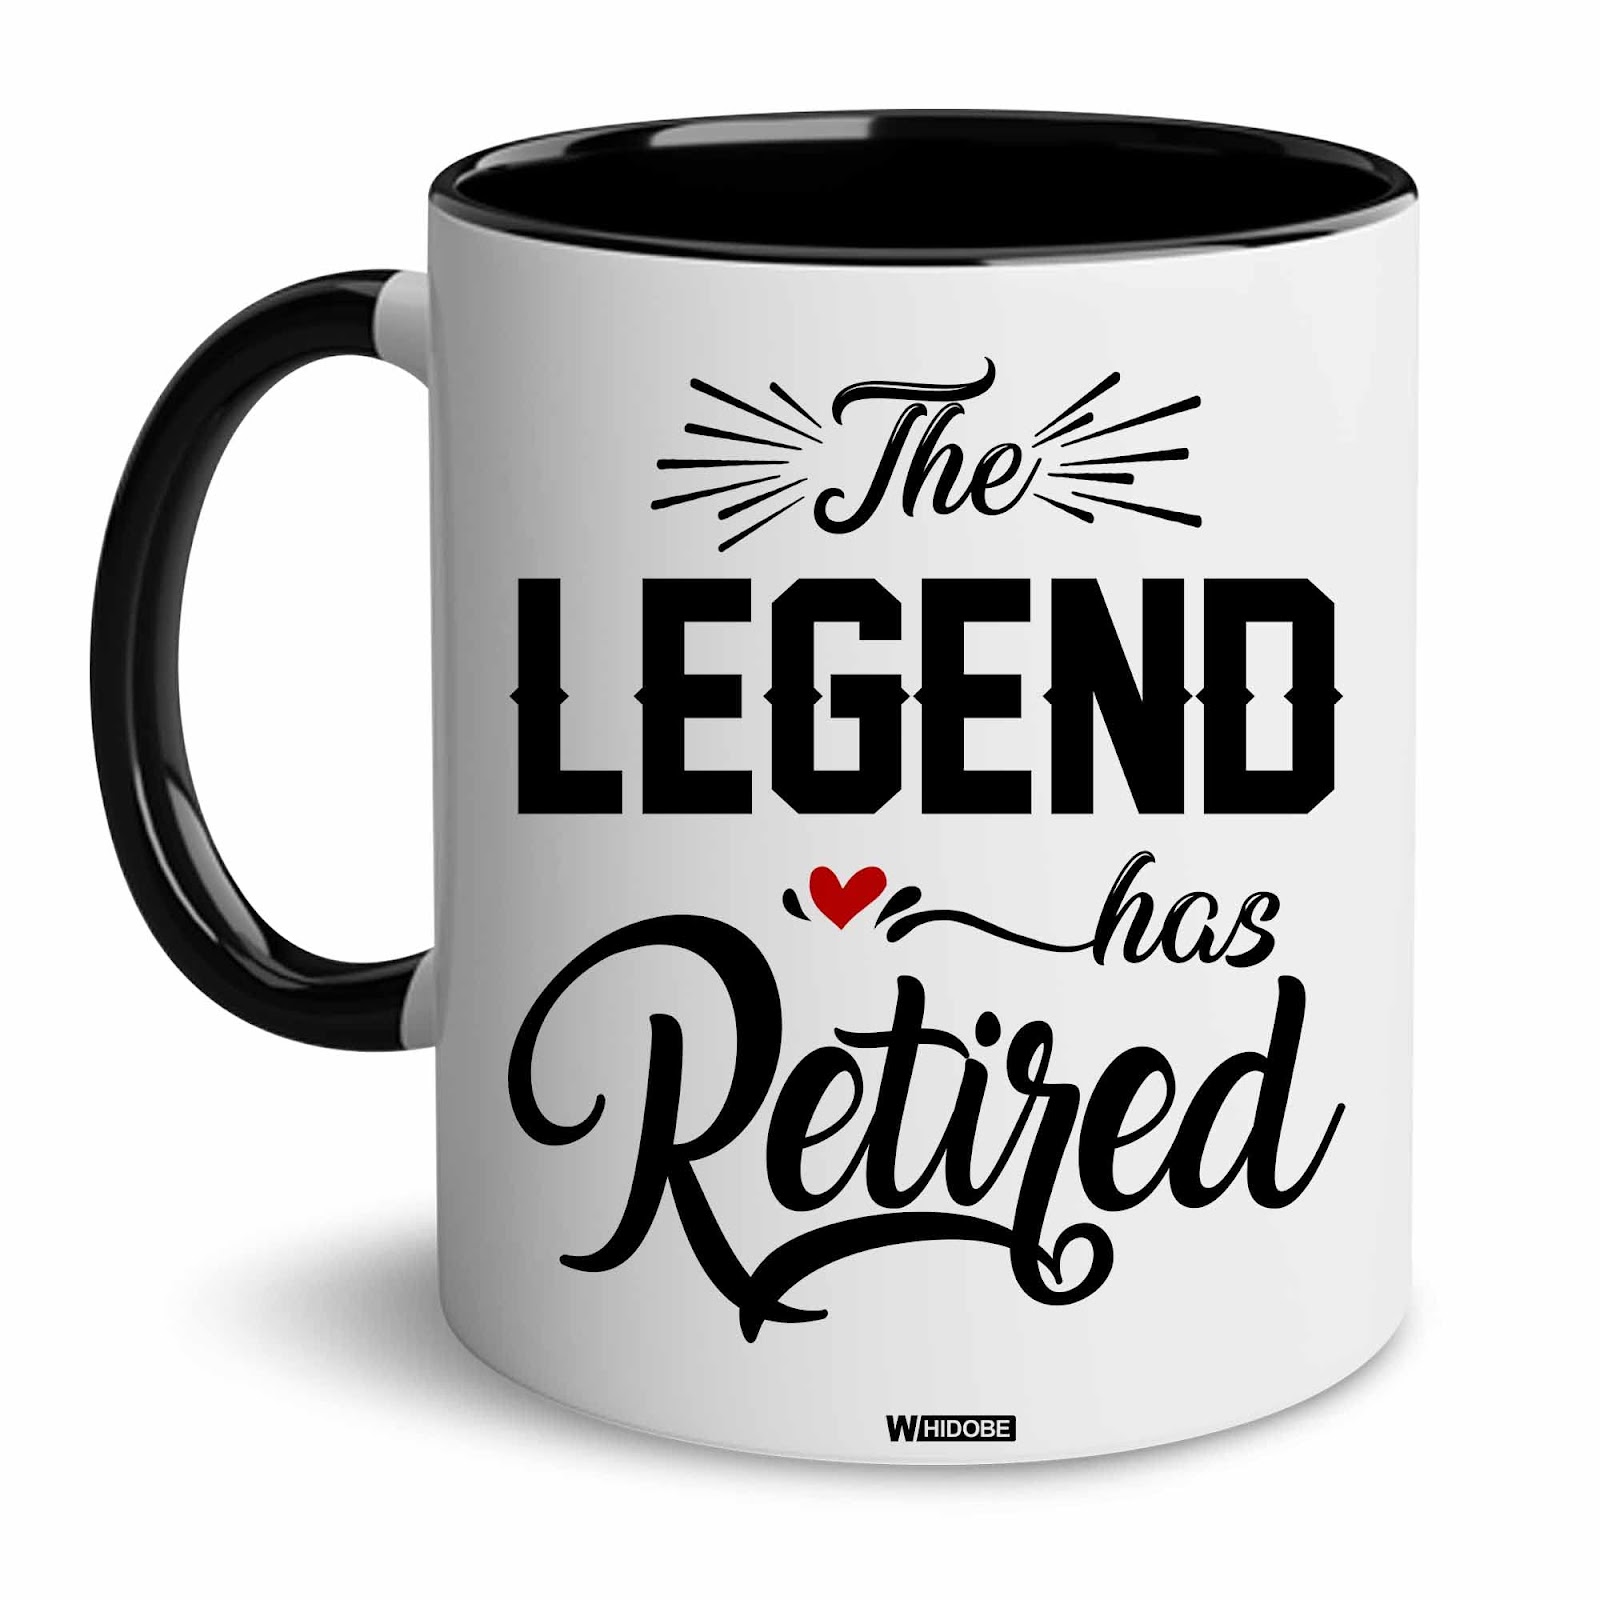 WHIDOBE Retirement Mug